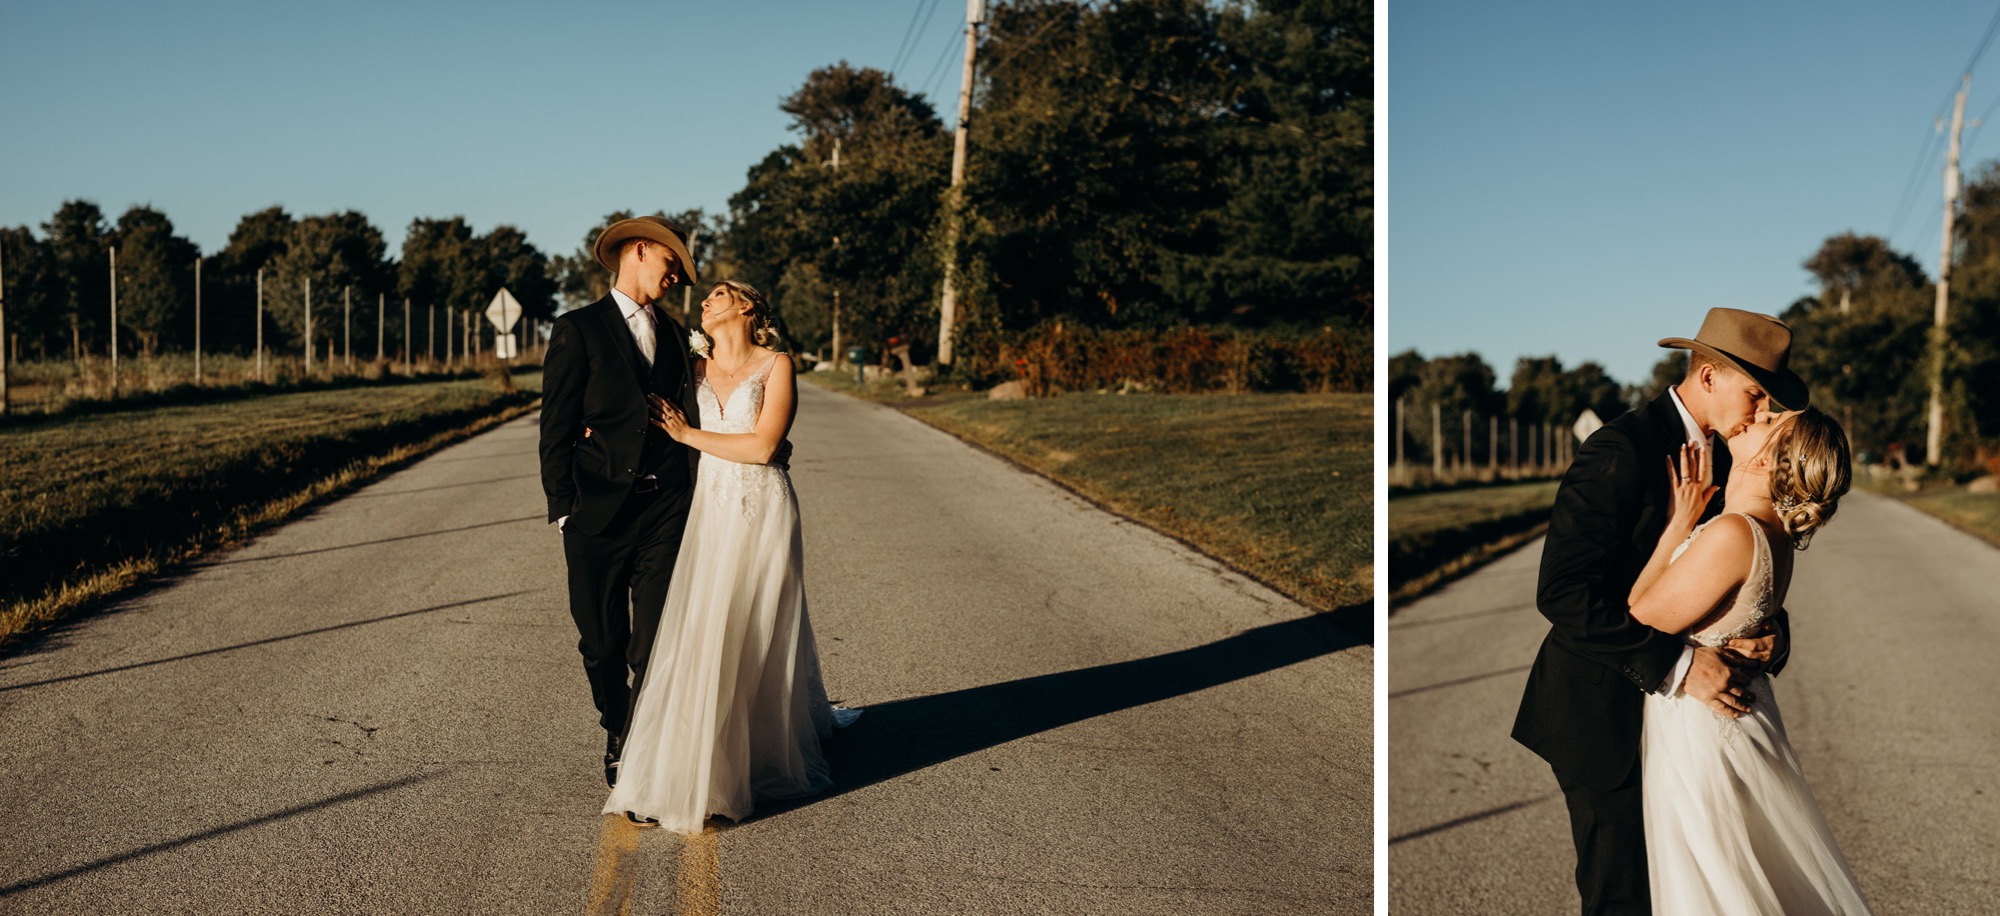 backyard wedding photos, upstate new york wedding photographer, candid wedding photos